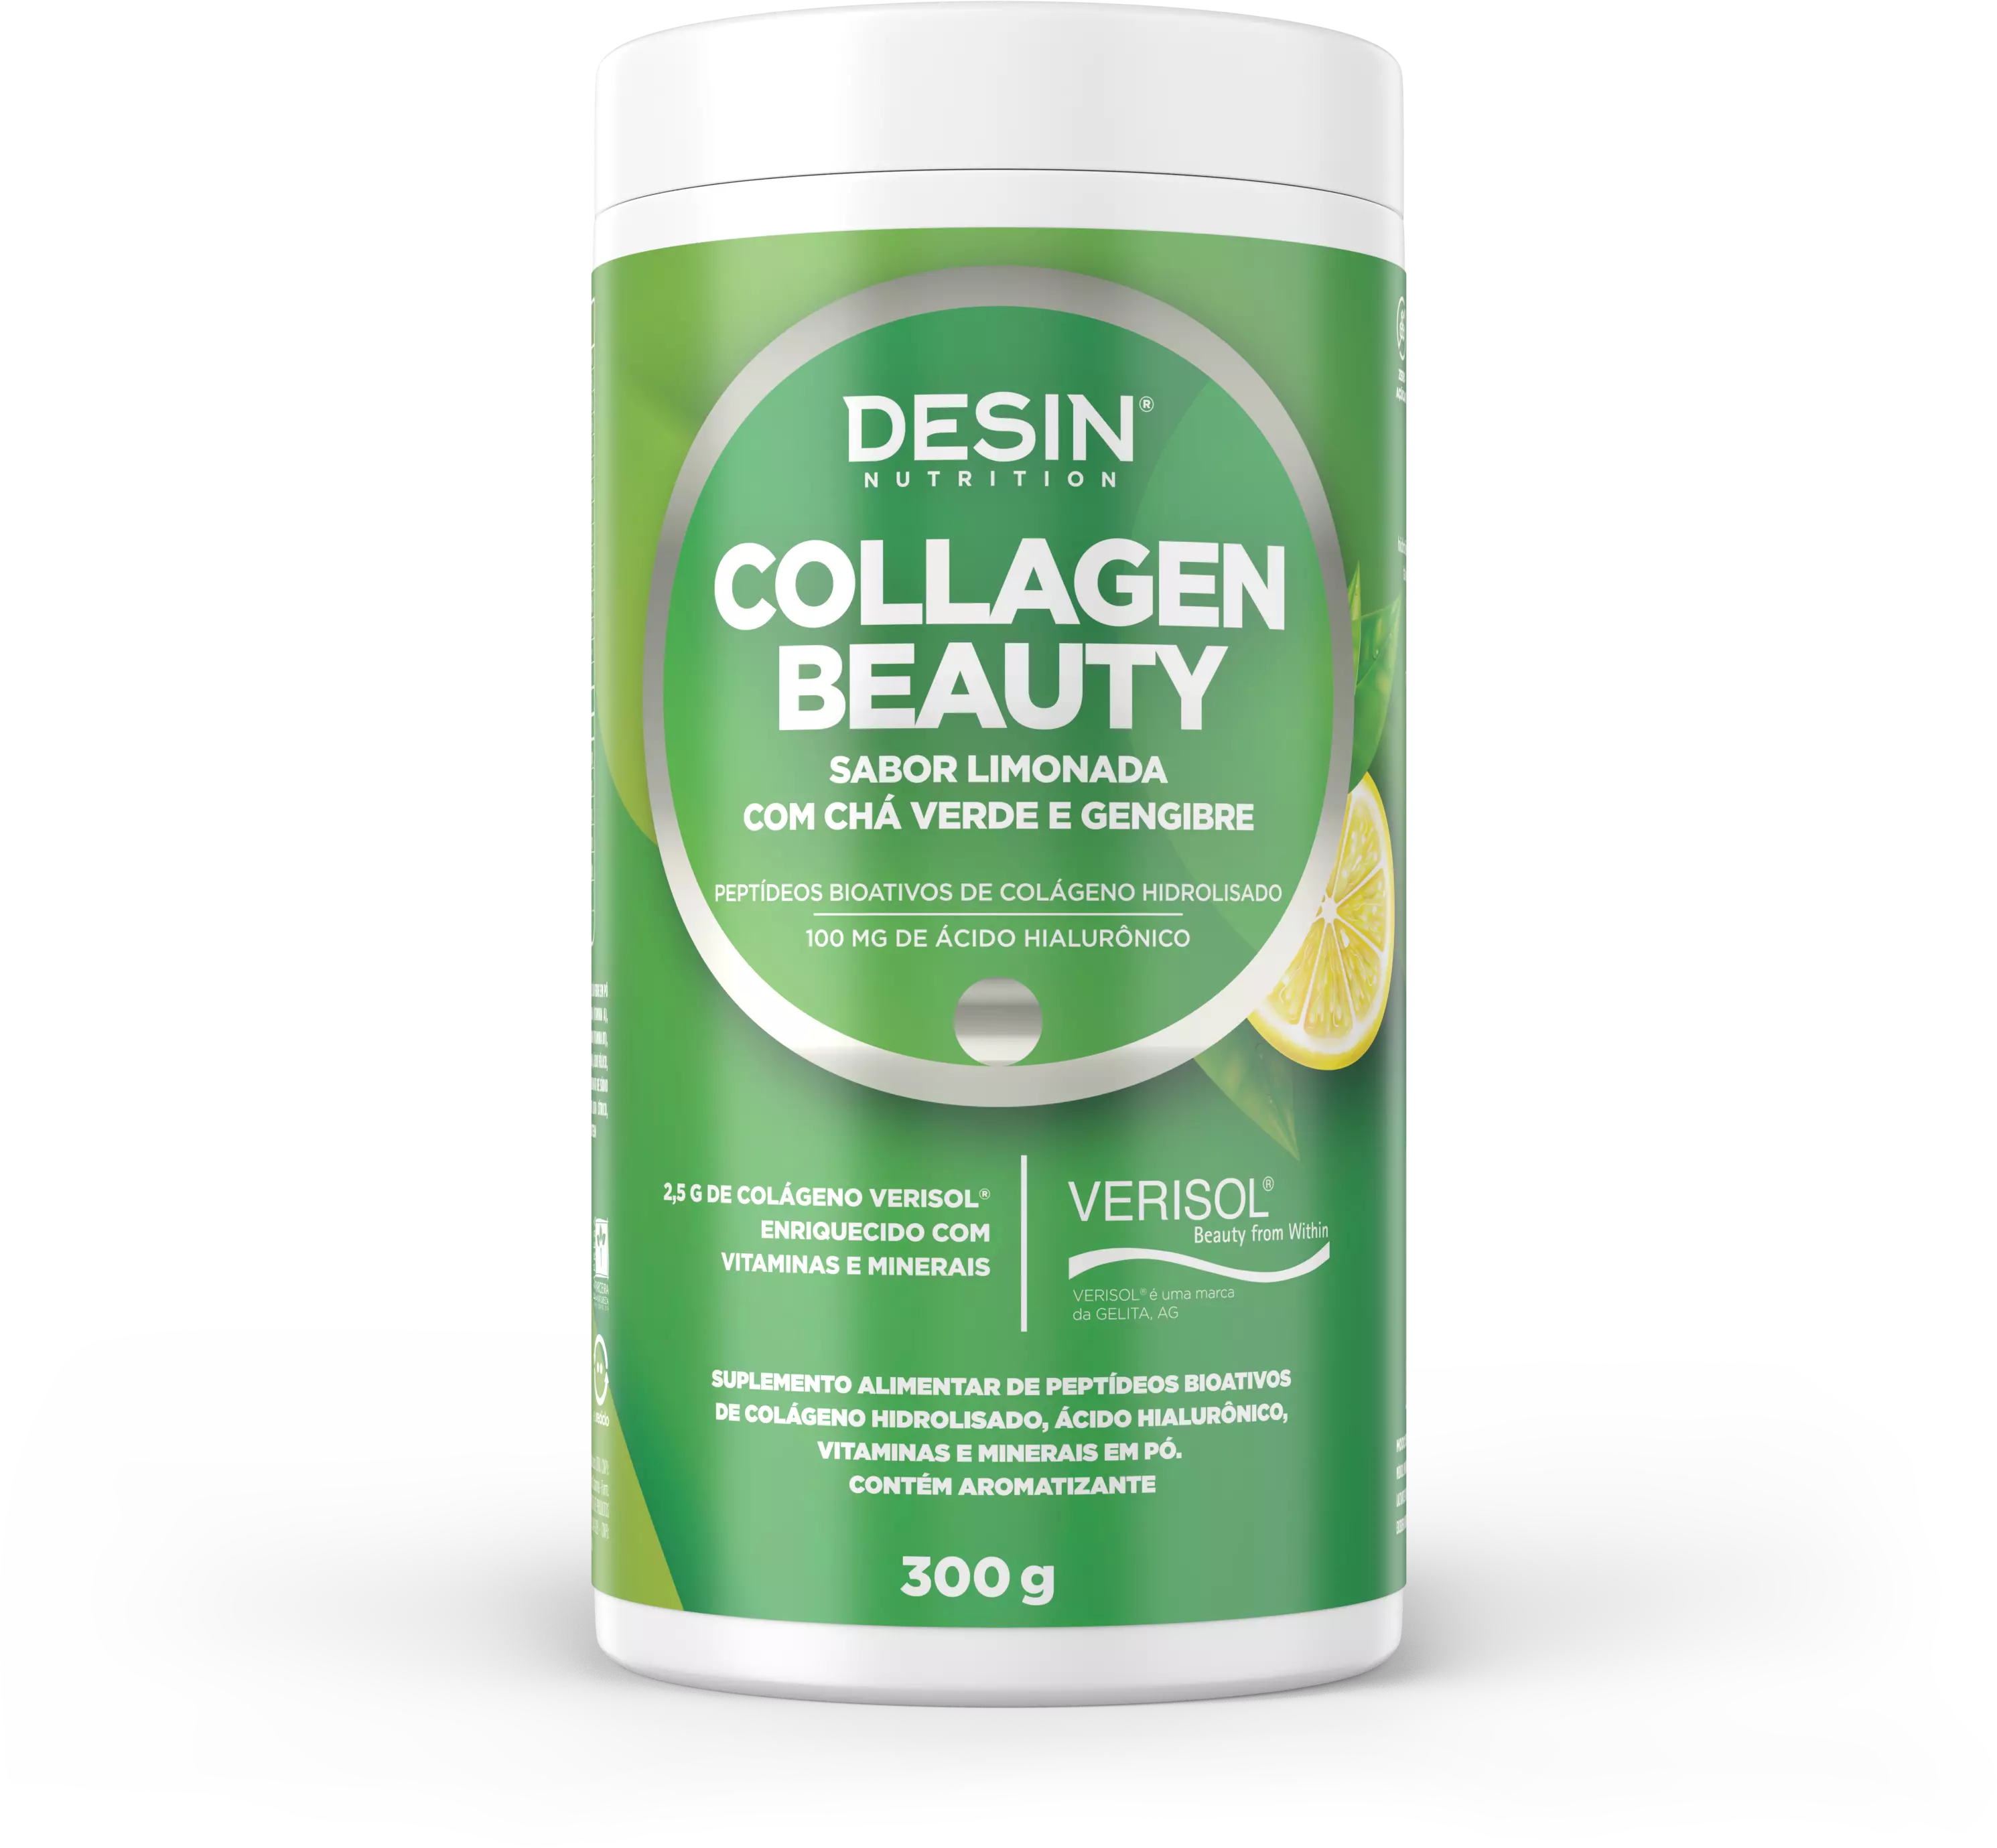 Frasco de Collagen Beauty sabor Limonada com 300 gramas de suplemento alimentar de colágeno verisol com ácido hialurônico